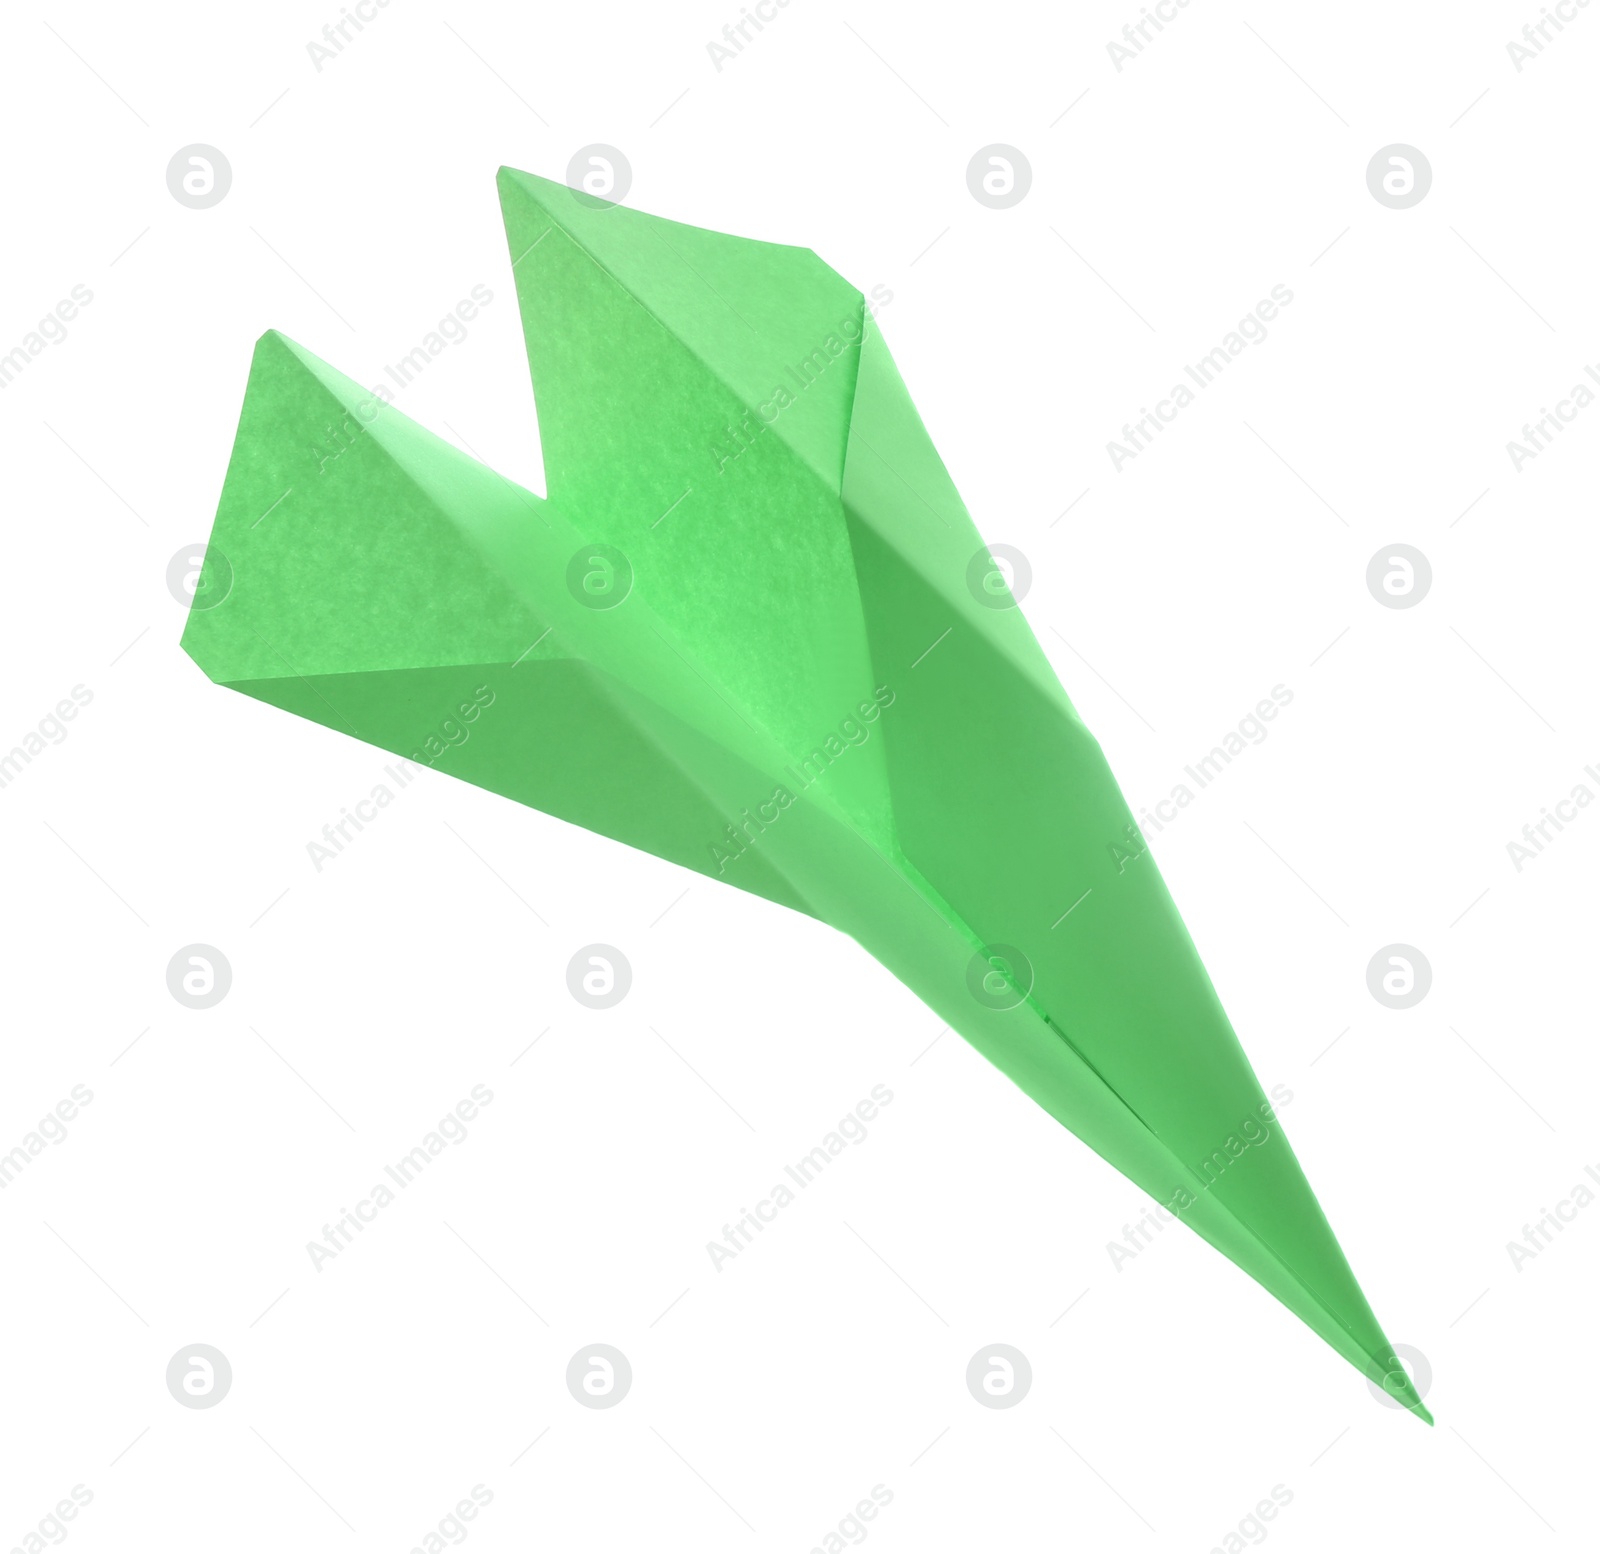 Photo of Handmade light green paper plane isolated on white